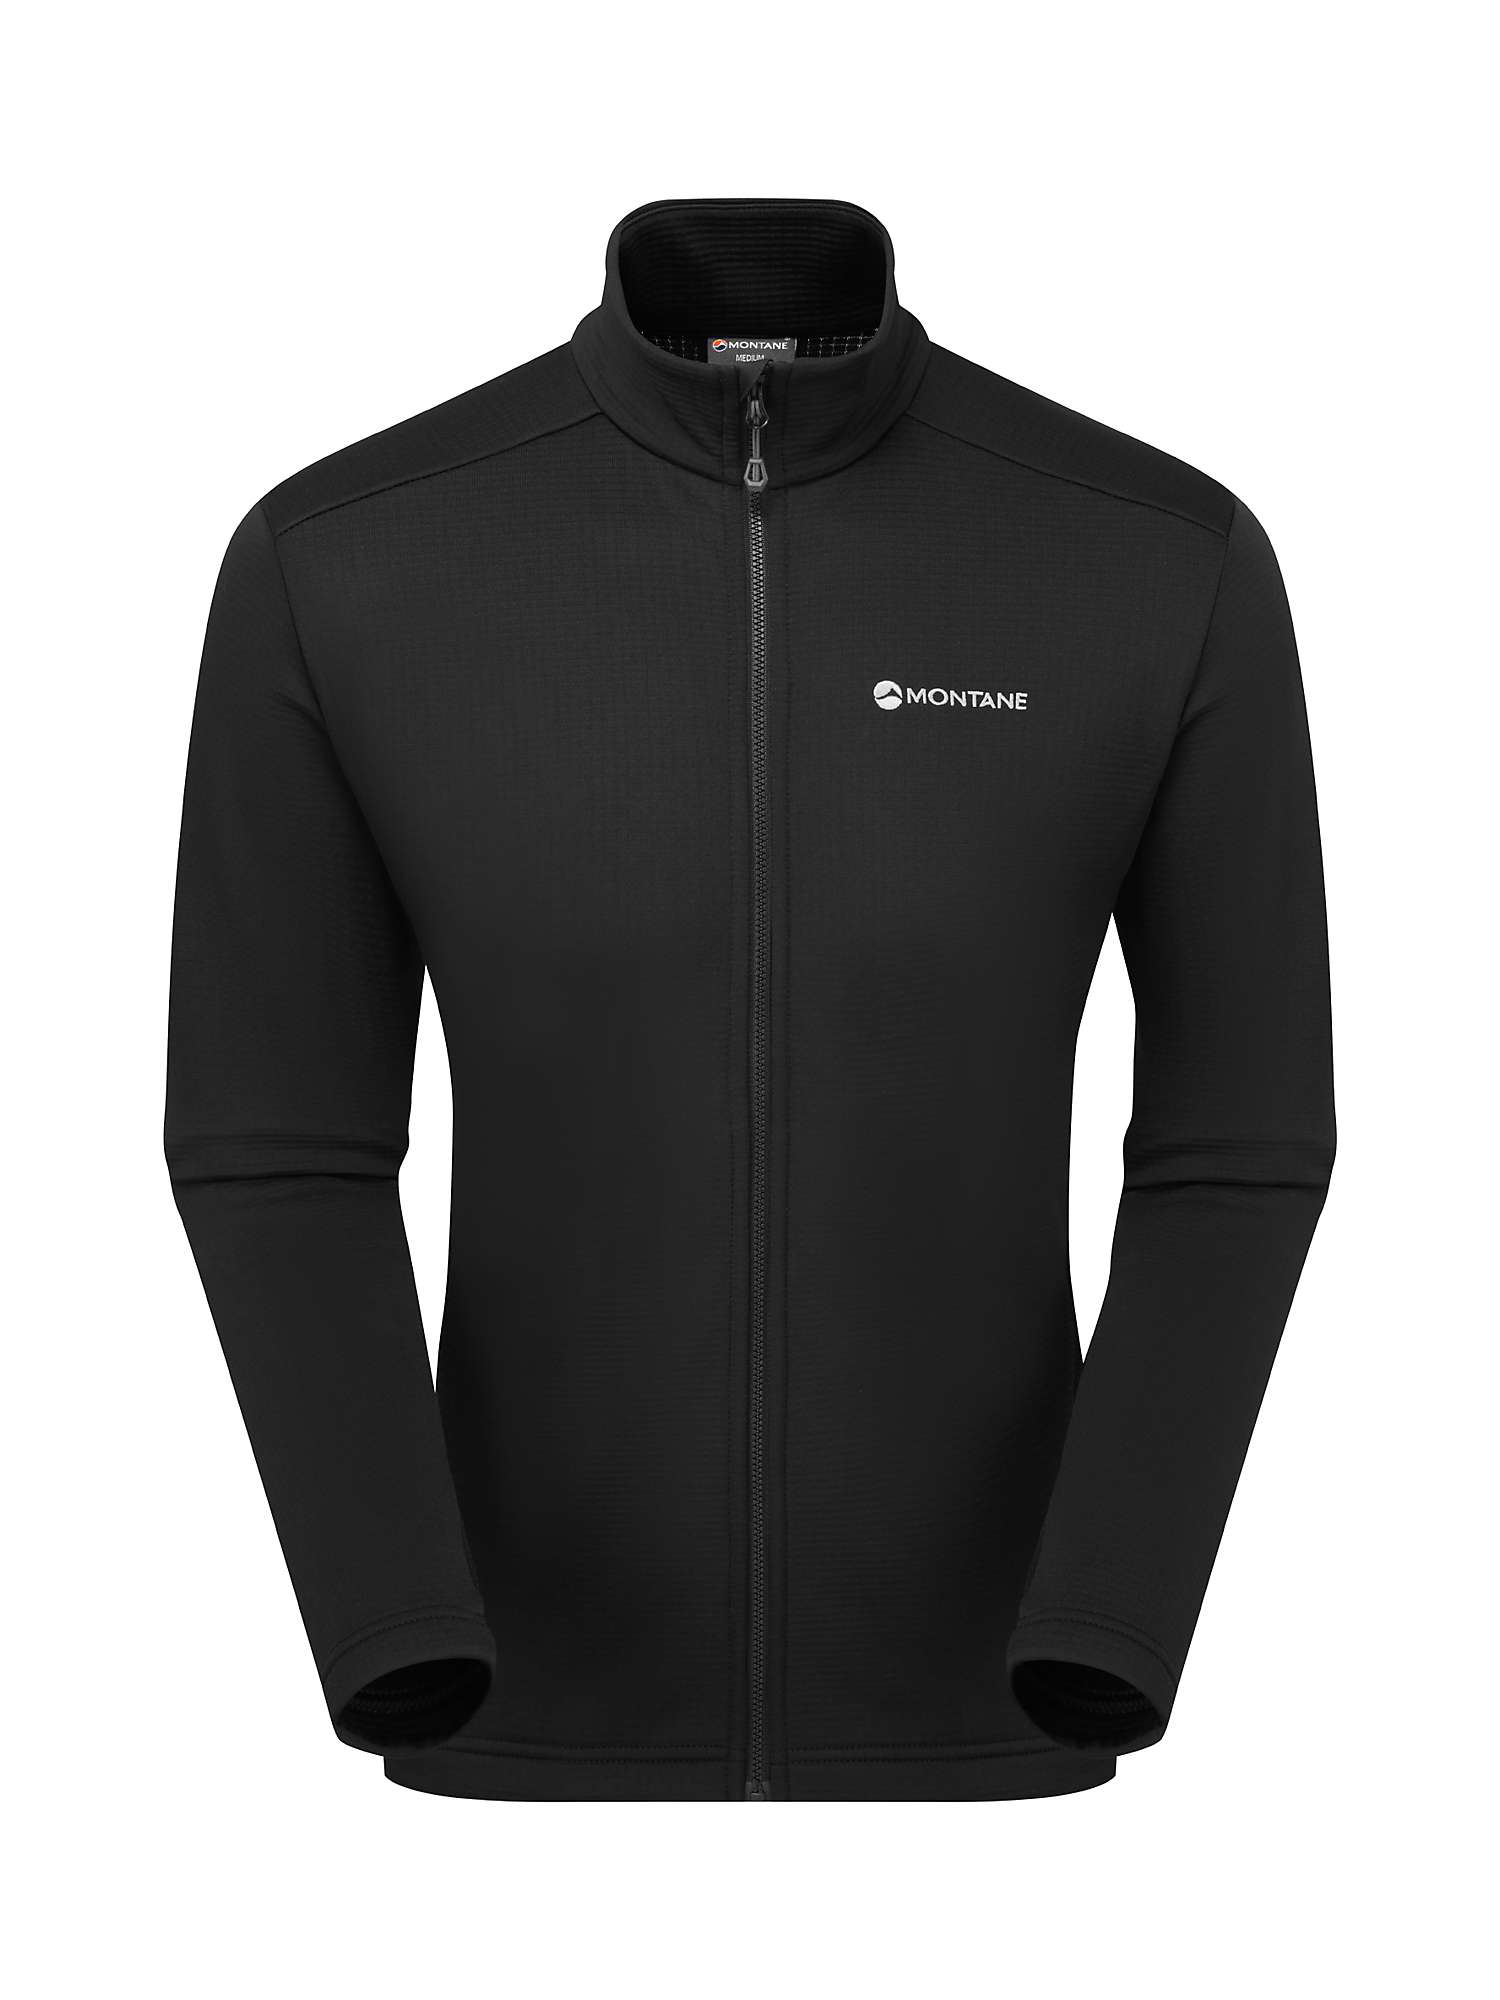 Buy Montane Protium Lightweight Breathable Jacket Online at johnlewis.com